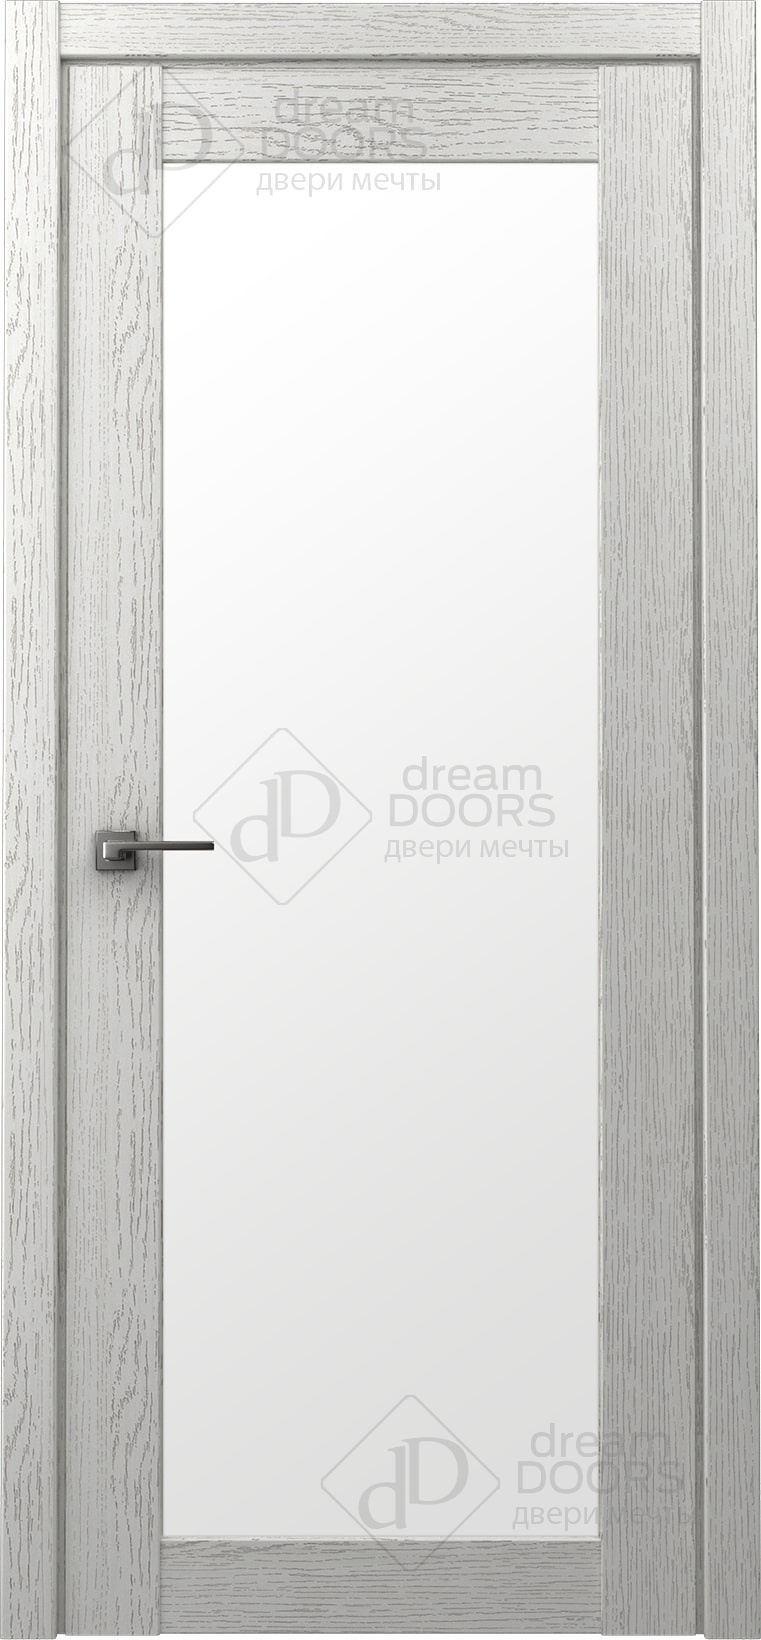 Dream Doors Межкомнатная дверь Престиж 1, арт. 16430 - фото №2